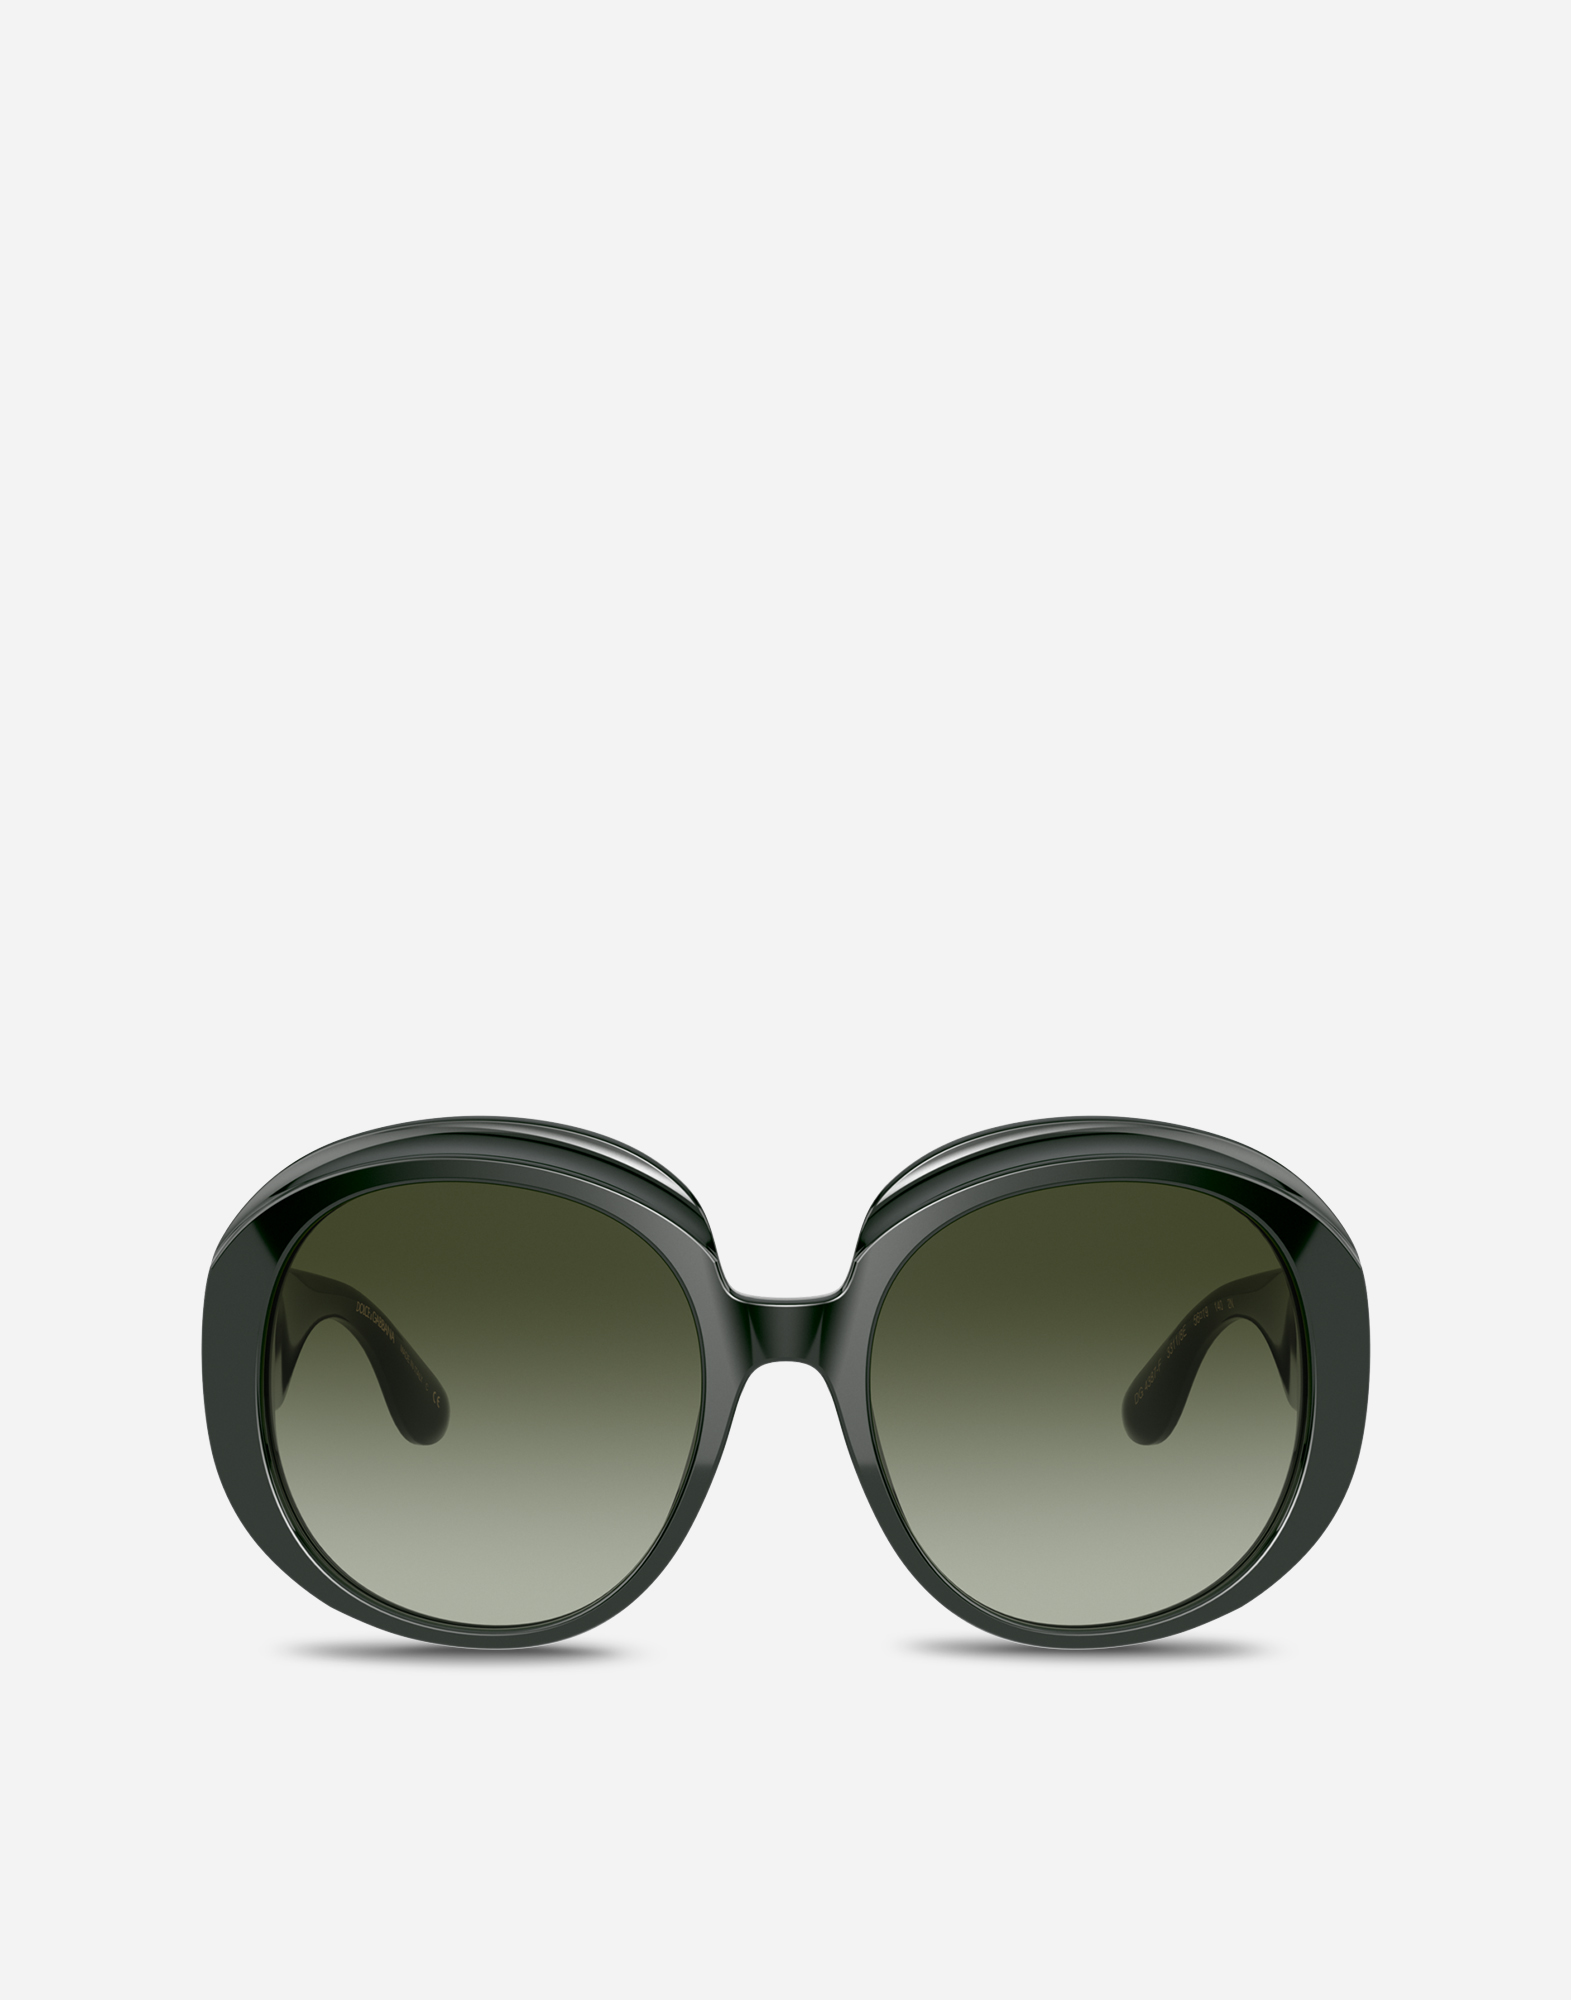 DG crossed sunglasses in Green